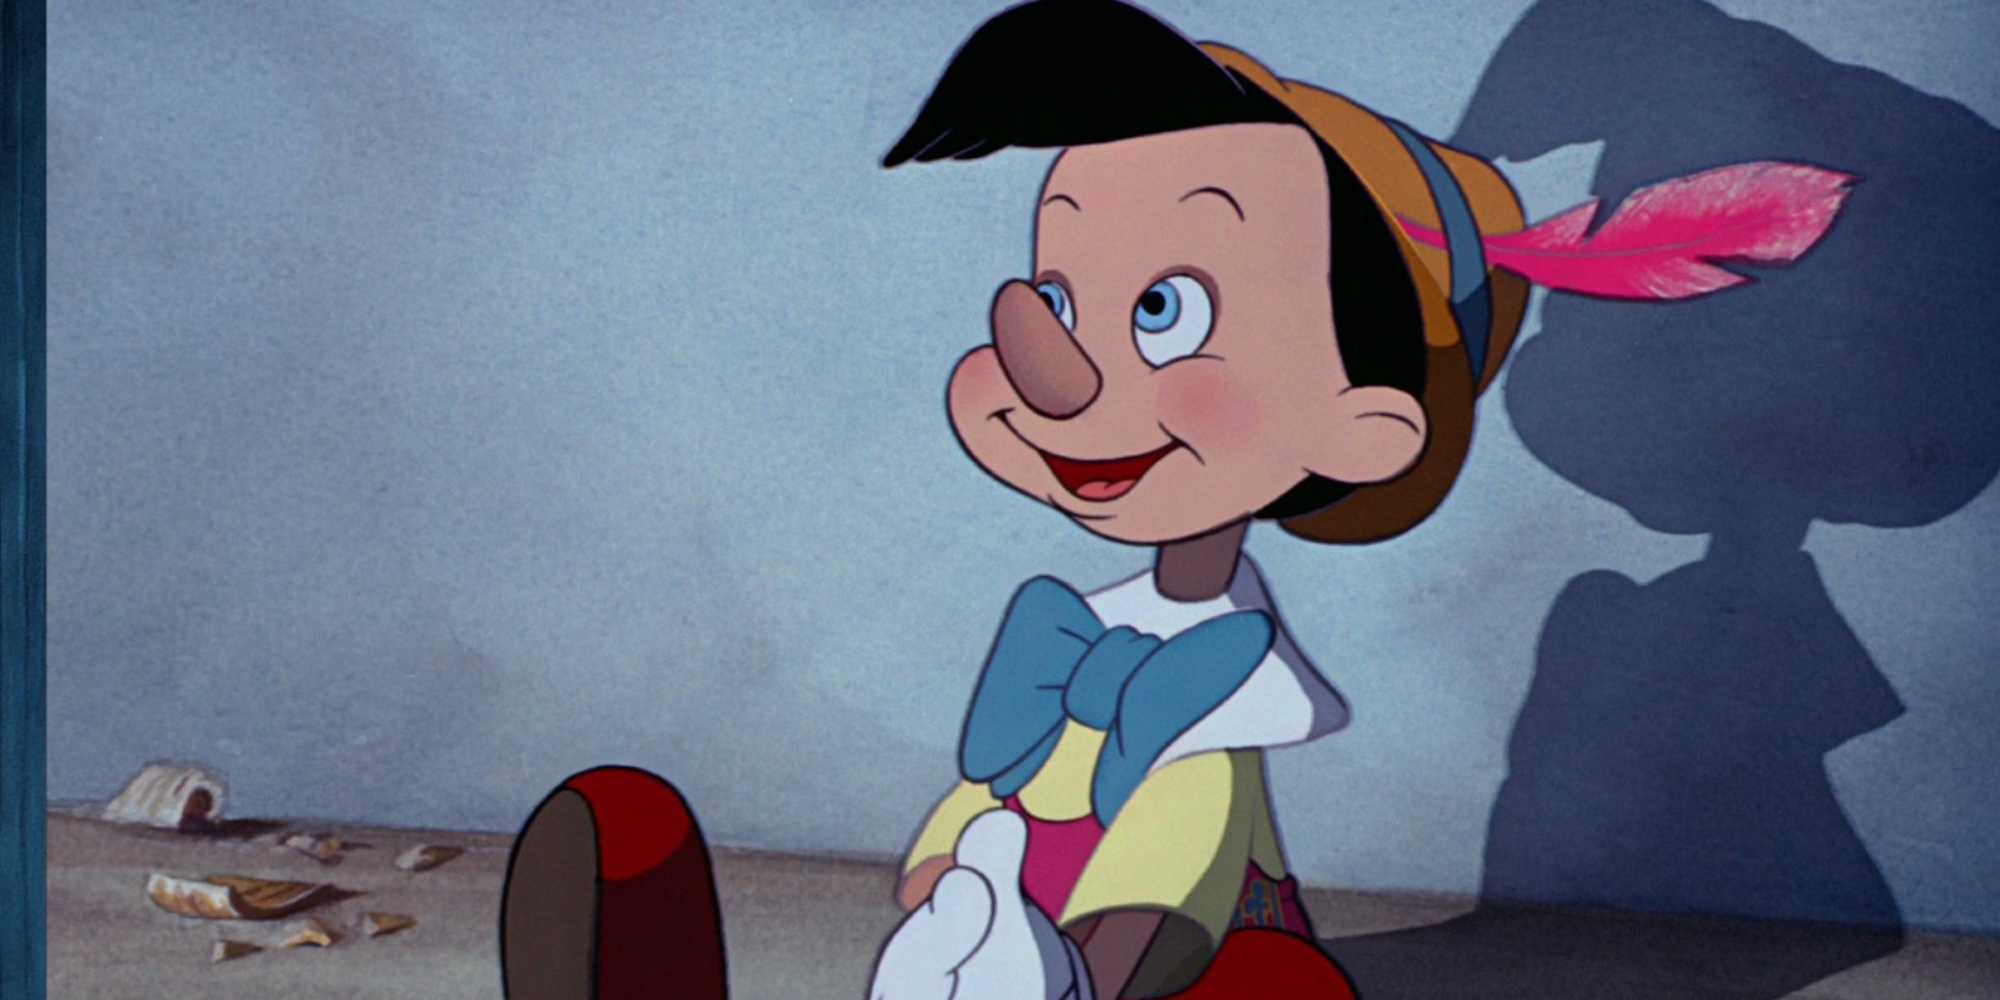 Pinocchio smiling while sitting down in Disney's Pinocchio.